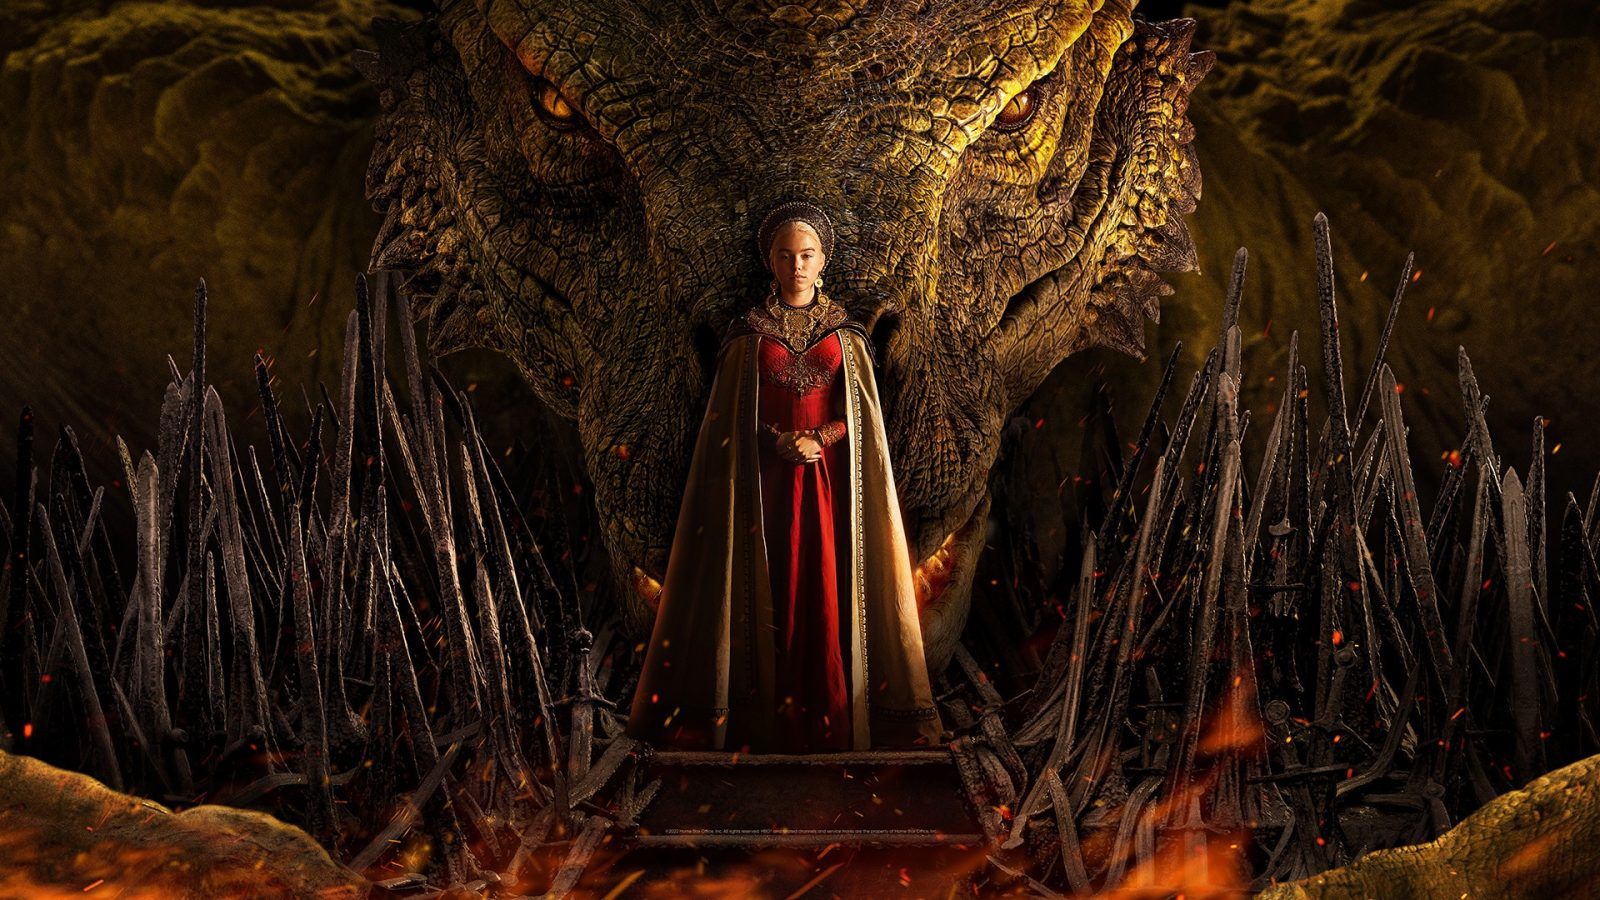 house of the dragon season 2: Season 2 of House of the Dragon